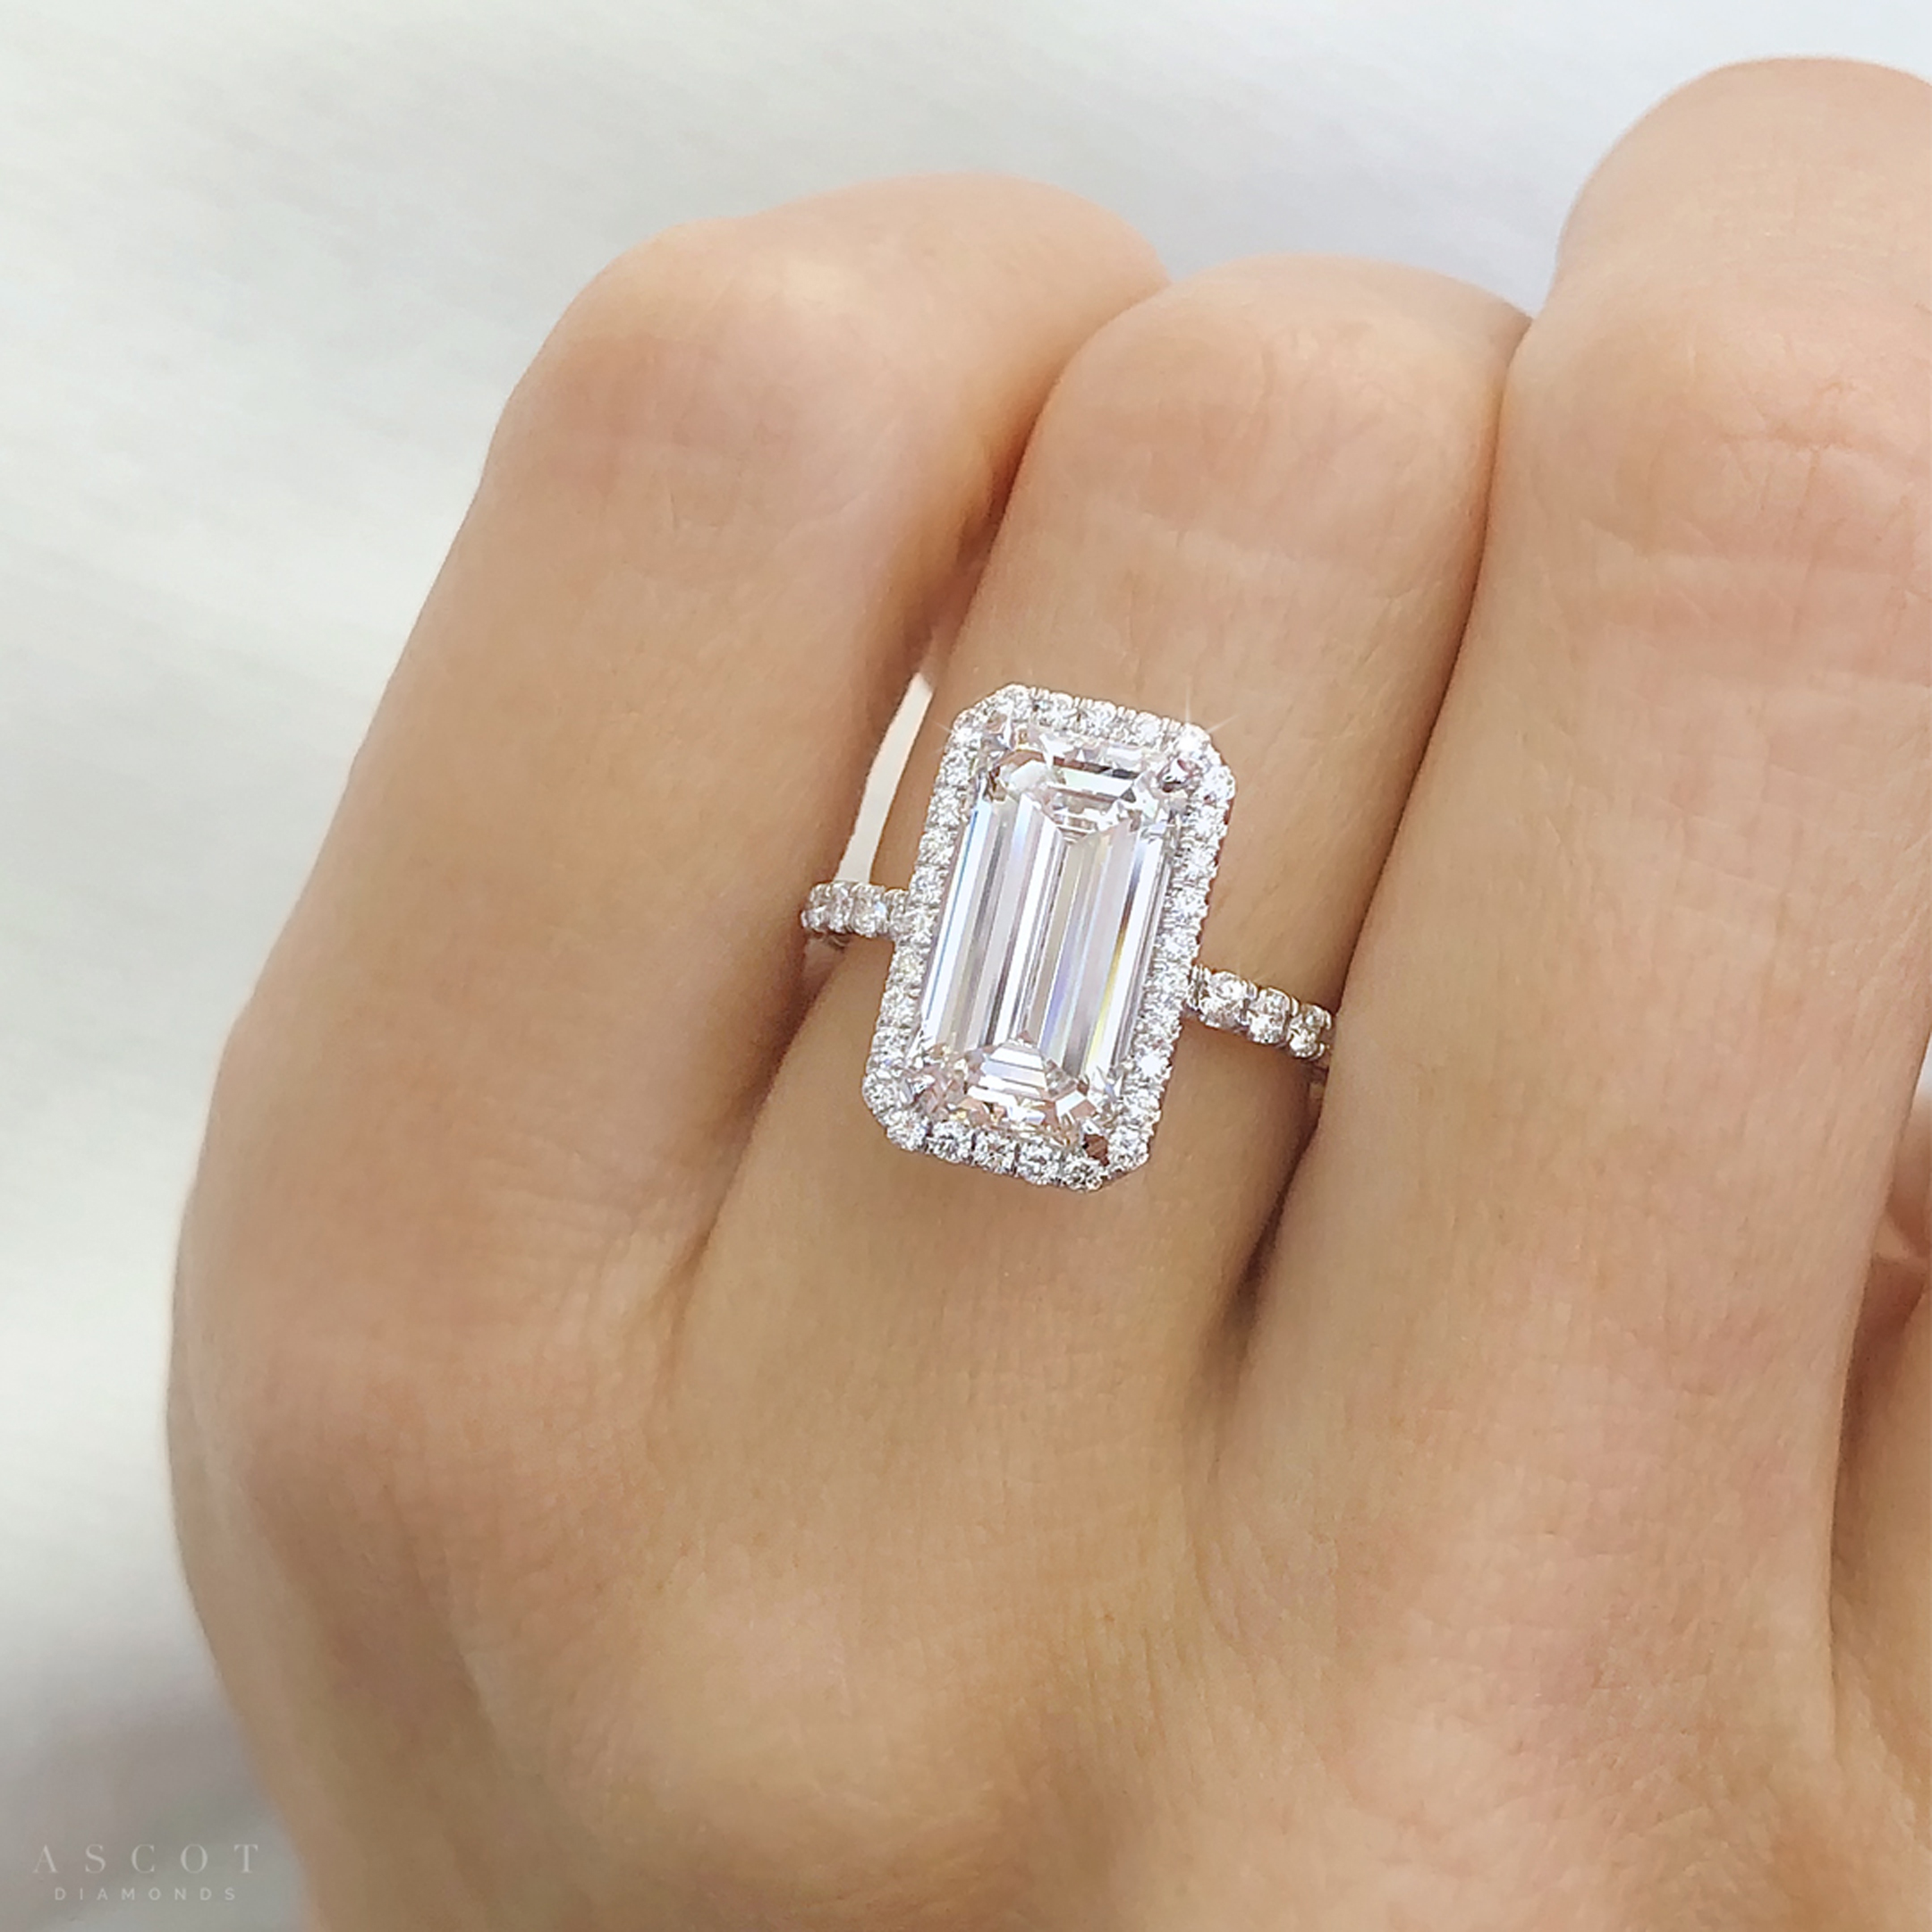 Emerald Cut Diamond Set In A Custom Halo Diamond Engagement Ring By Ascot Diamonds Atlanta@2x 